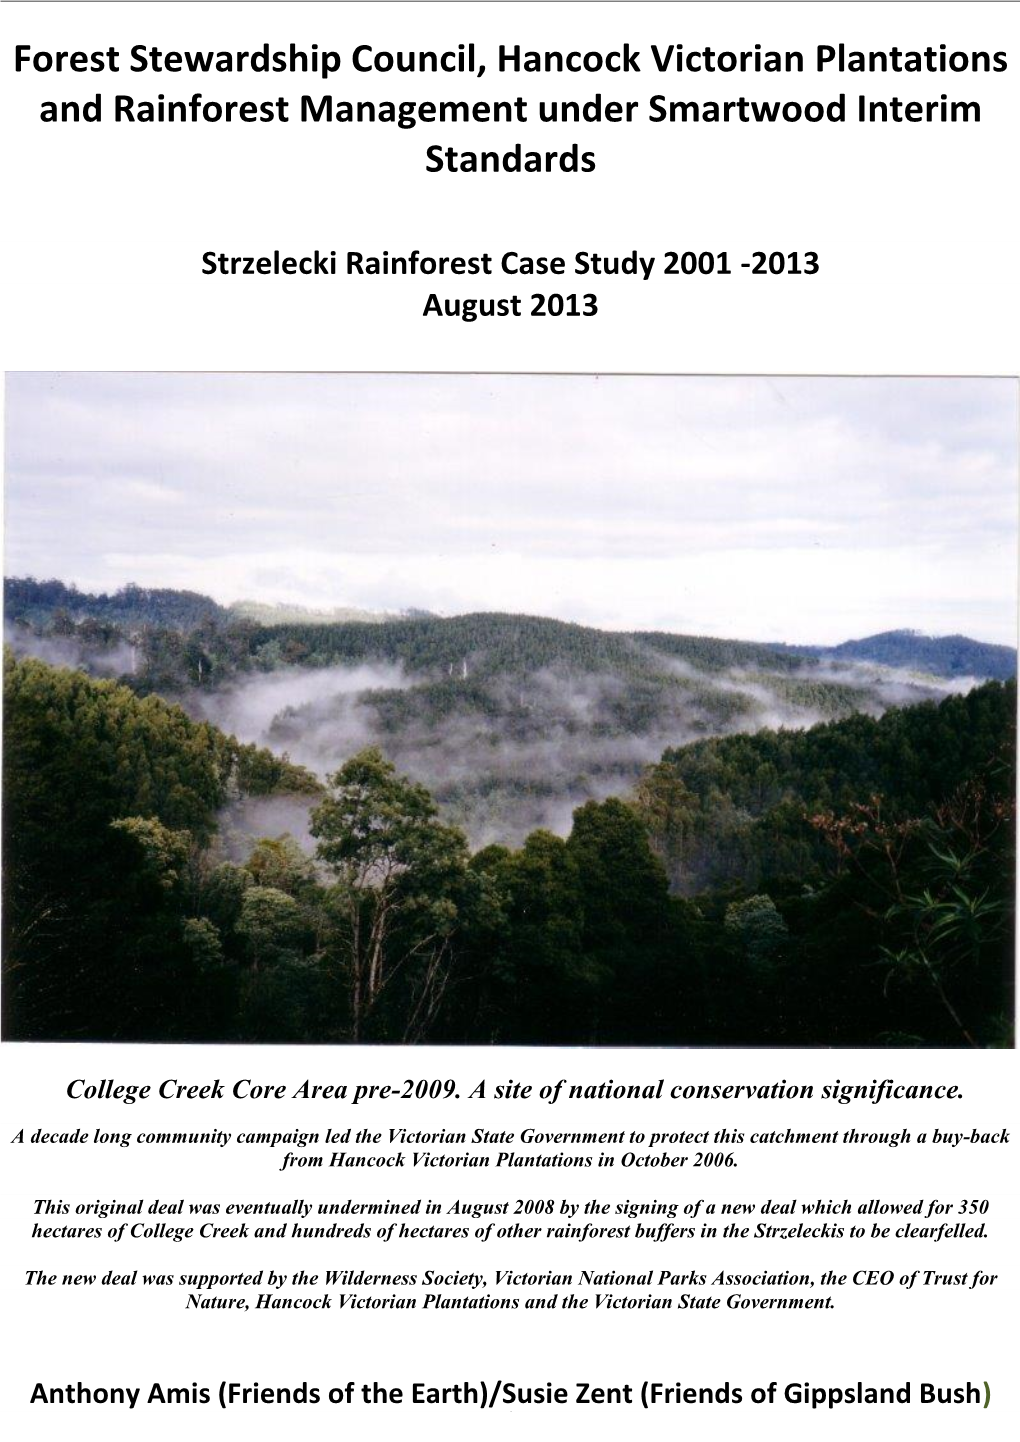 Forest Stewardship Council, Hancock Victorian Plantations and Rainforest Management Under Smartwood Interim Standards